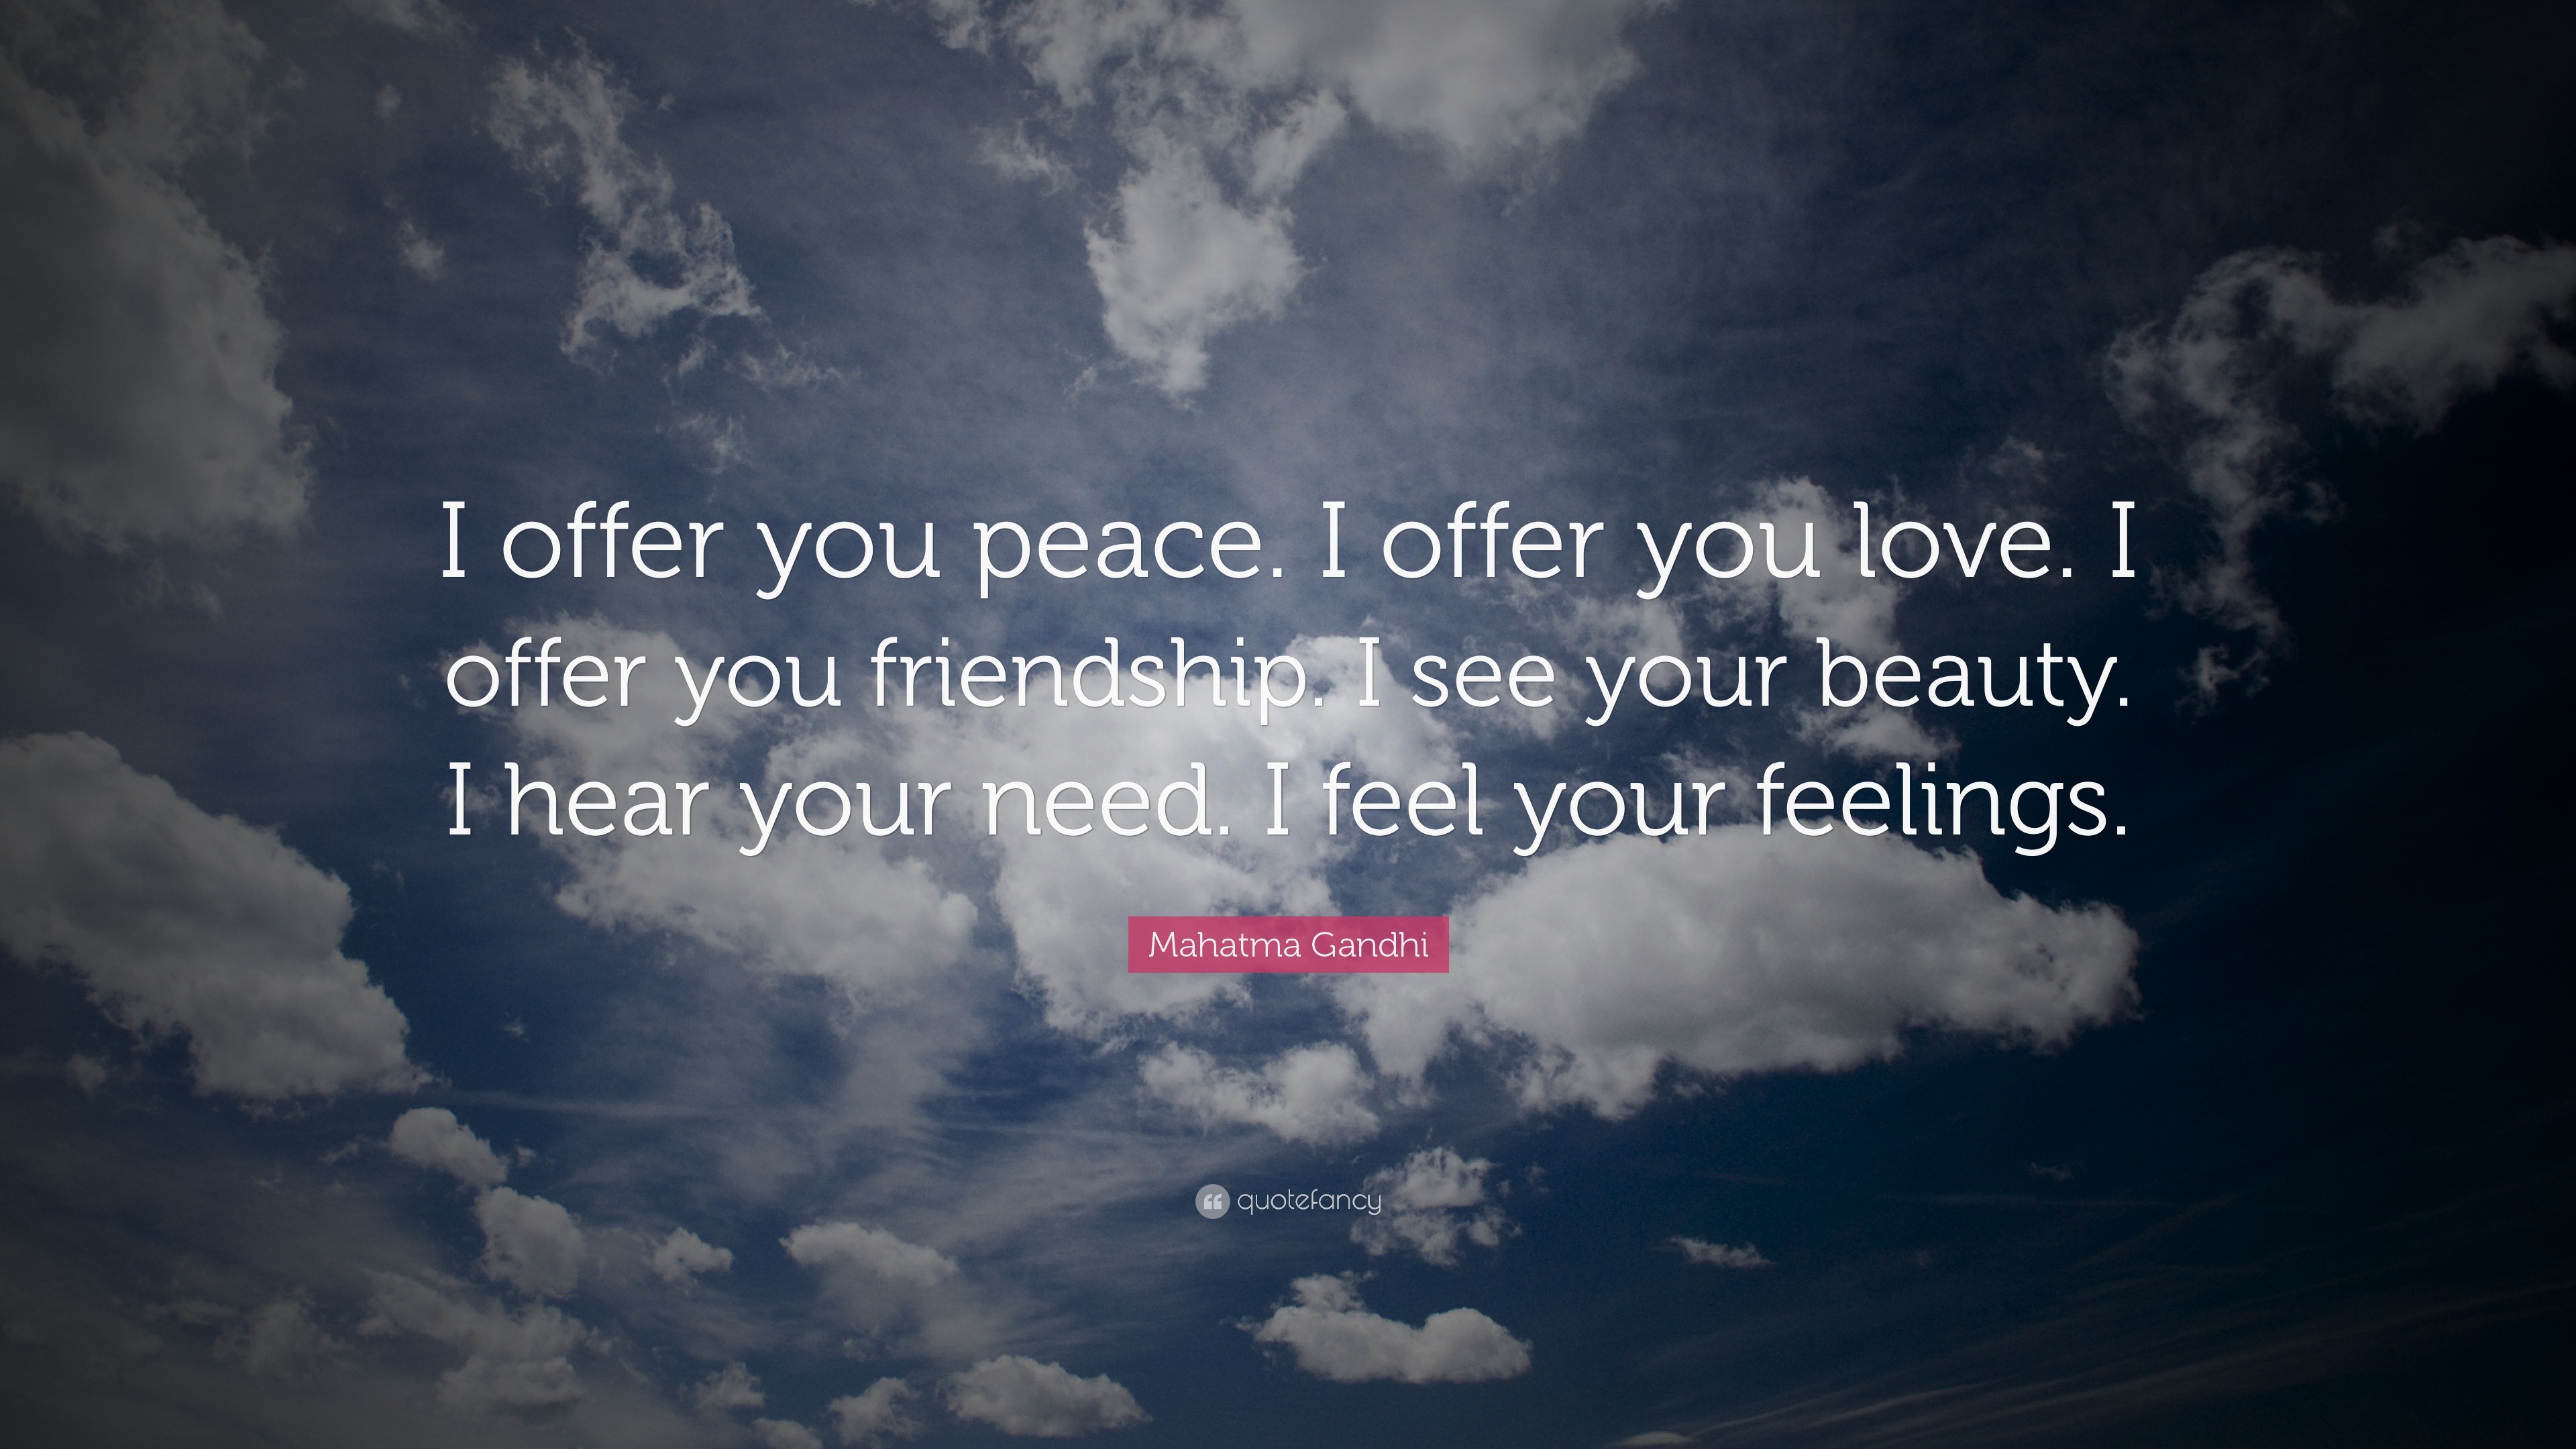 Mahatma Gandhi Quote: "I offer you peace. I offer you love ...